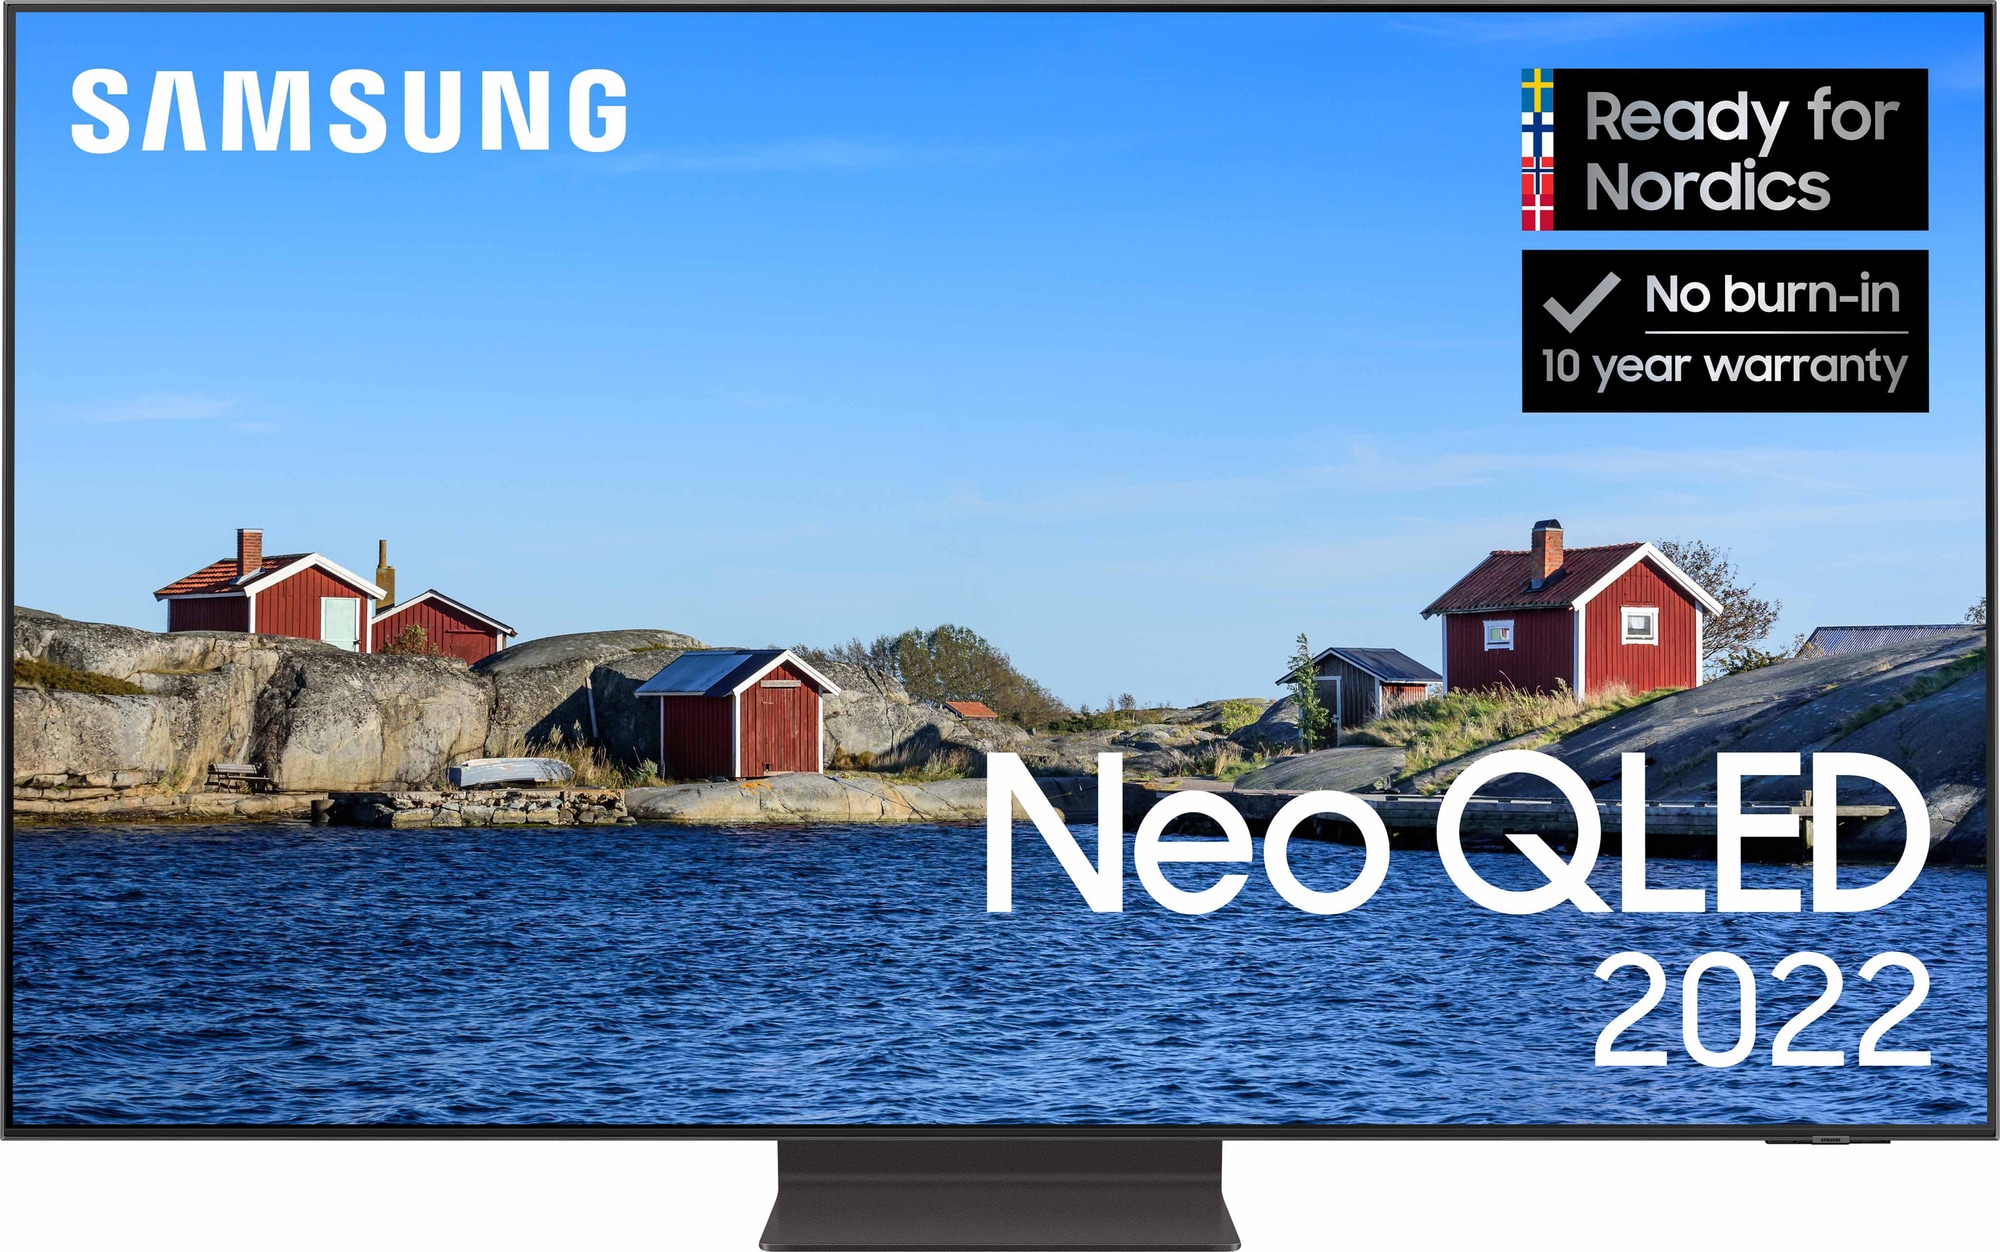 Samsung 4K NQLED Smart TV (2022) |